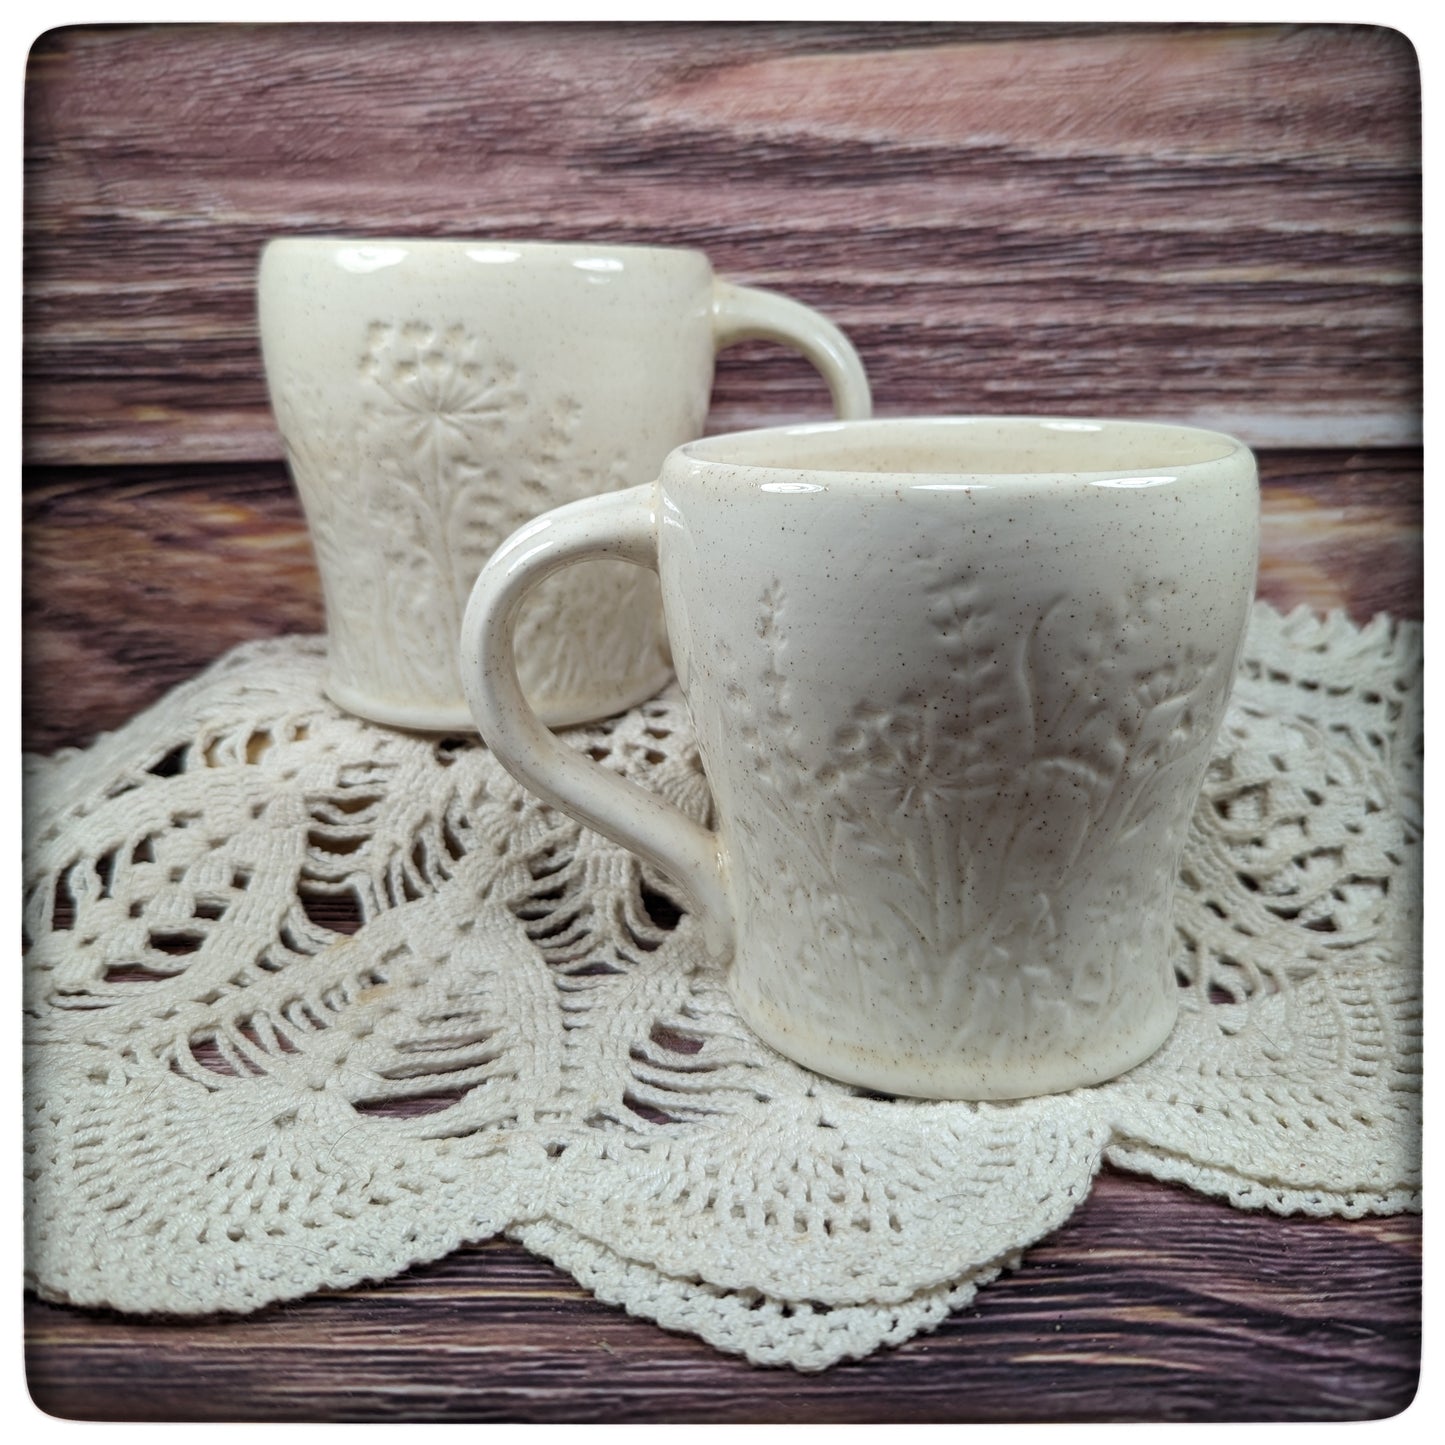 Meadow Dandelion mug